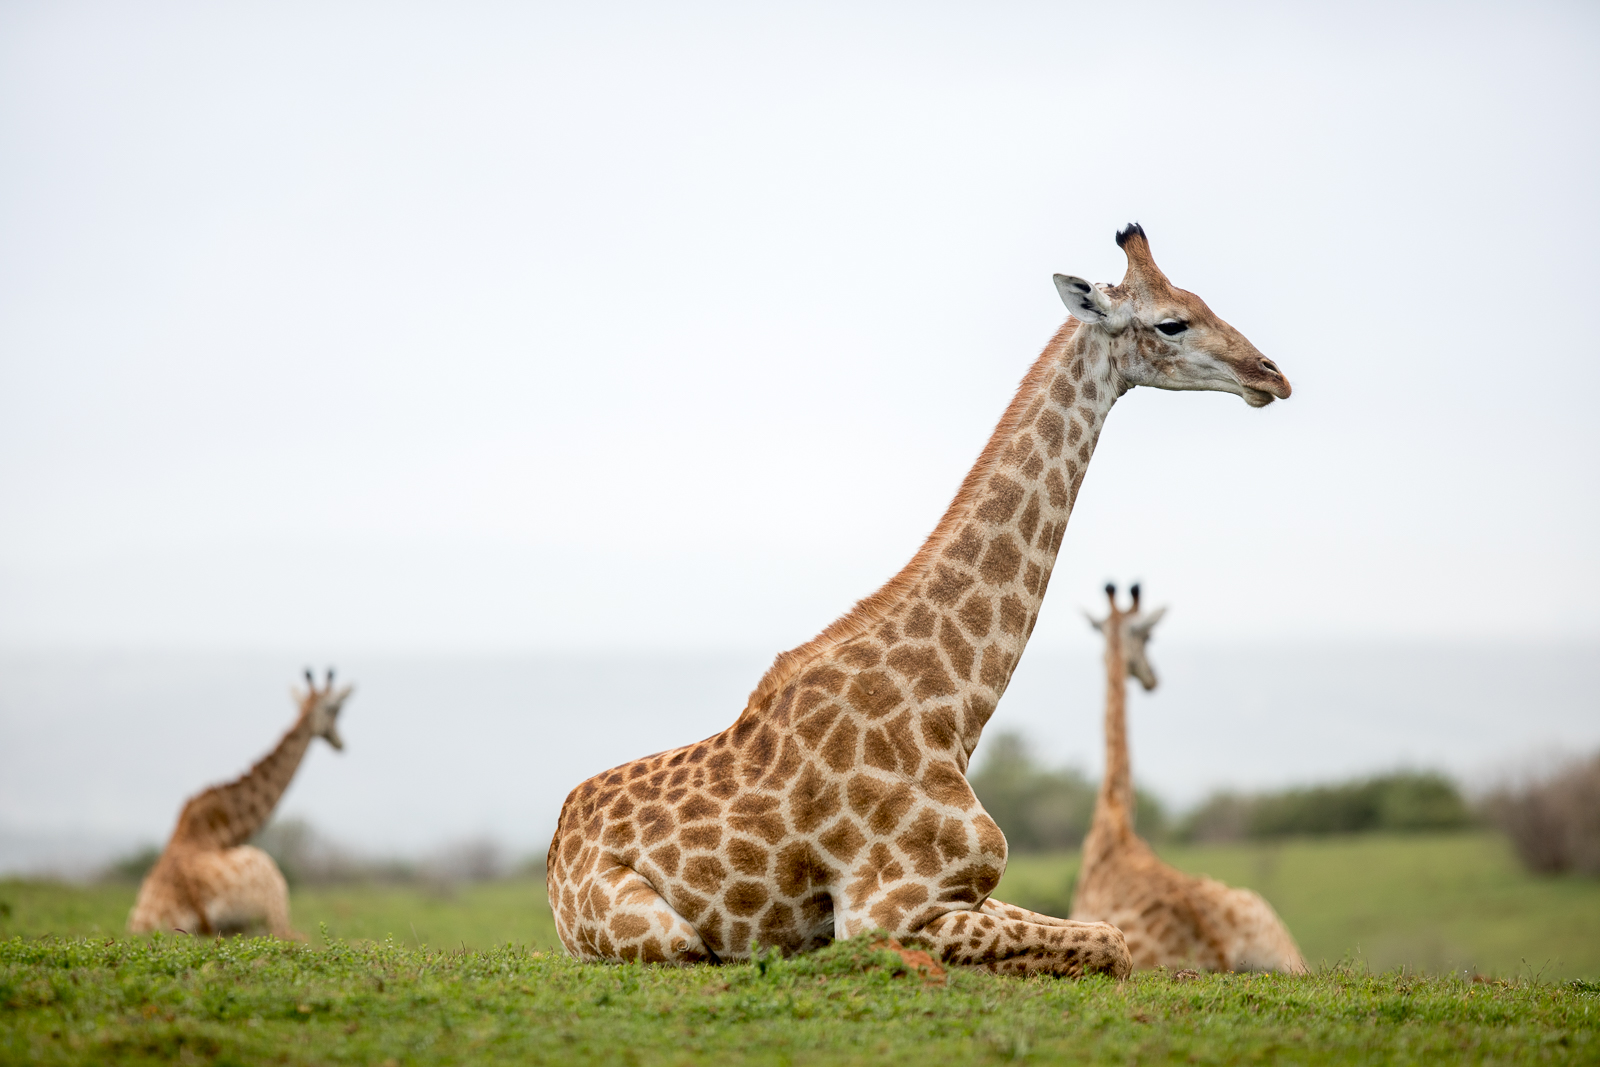 Southern African Giraffe resting